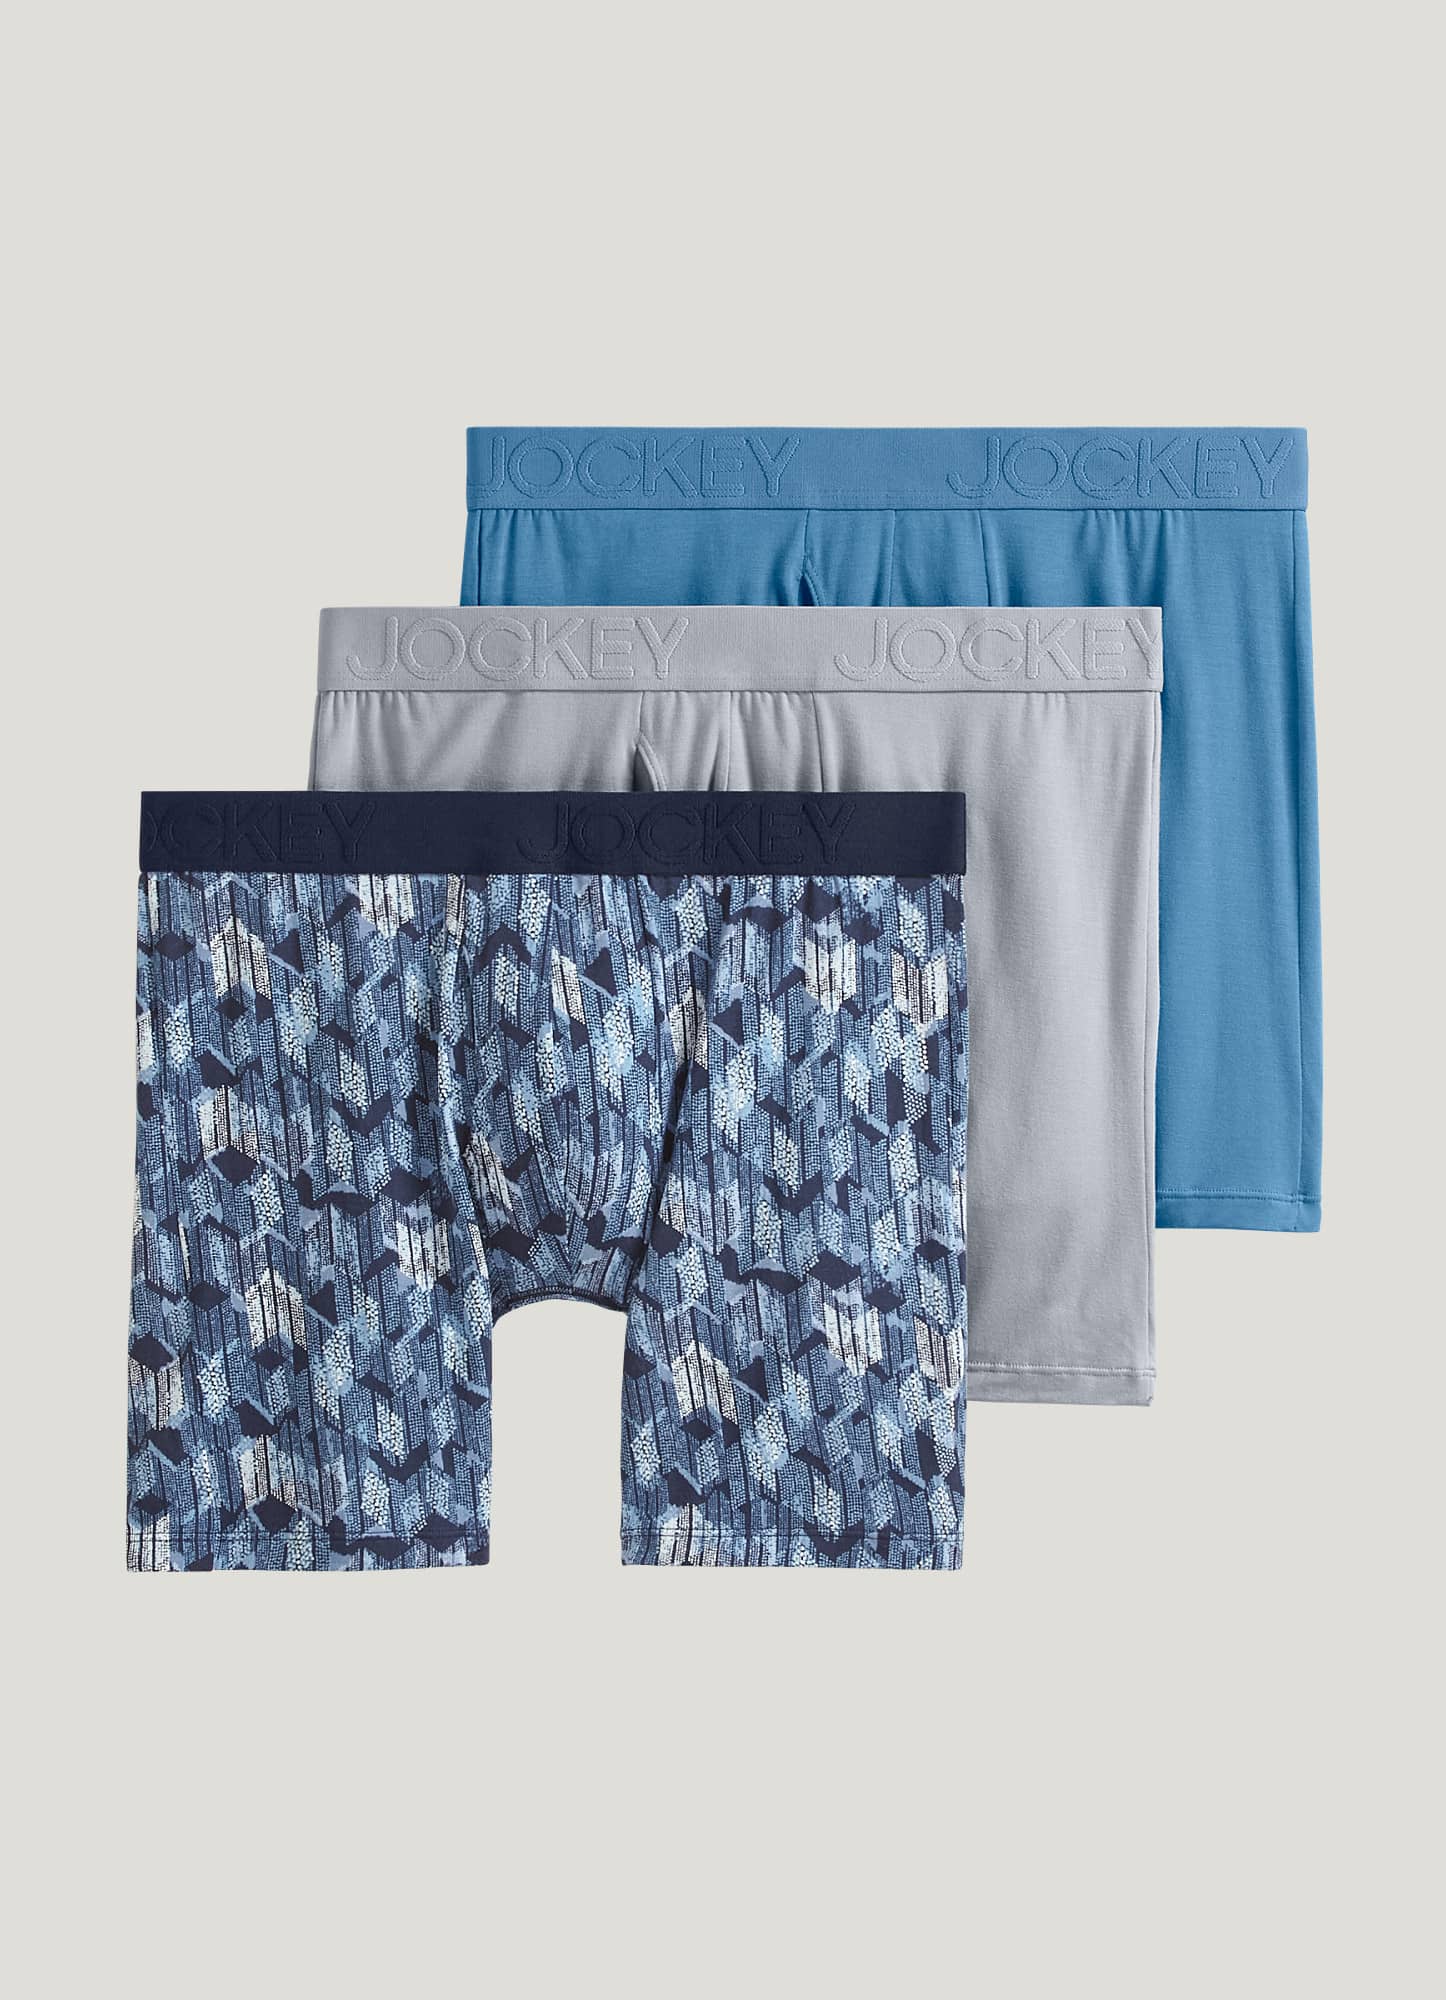 Soft mens jockey underwear sale For Comfort 